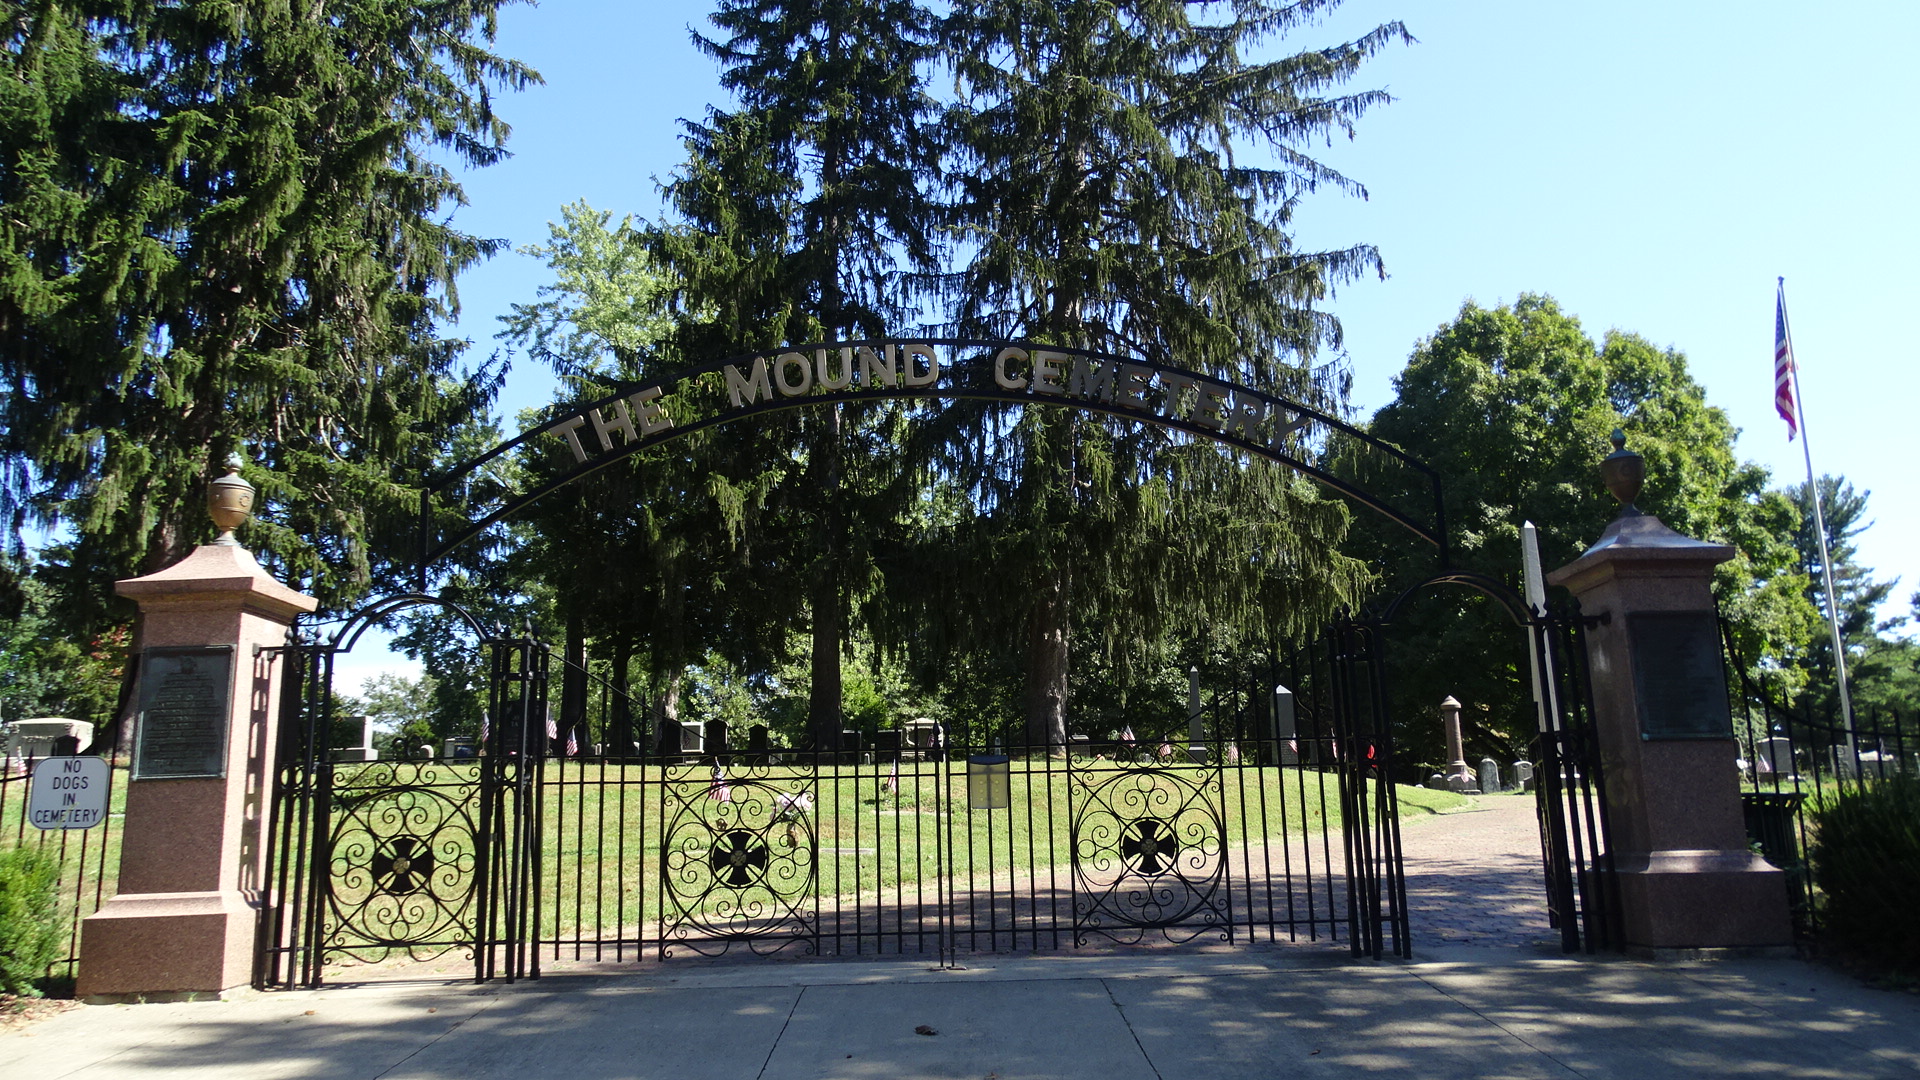 Mound Cemetery Marietta Ohio paranormal